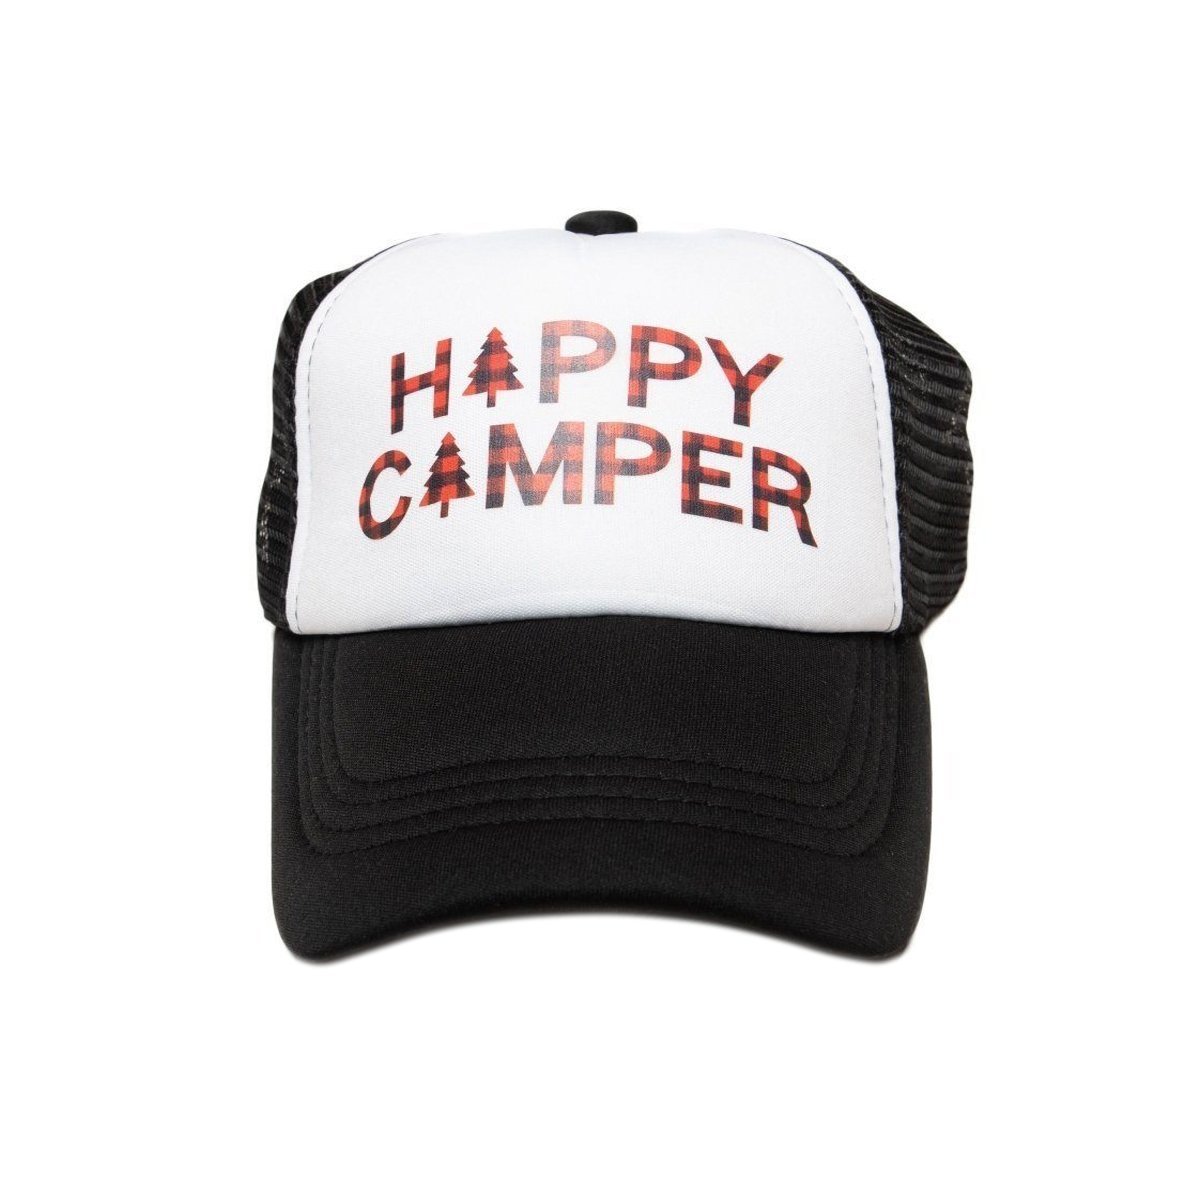 HAPPY CAMPER HAT - HATS